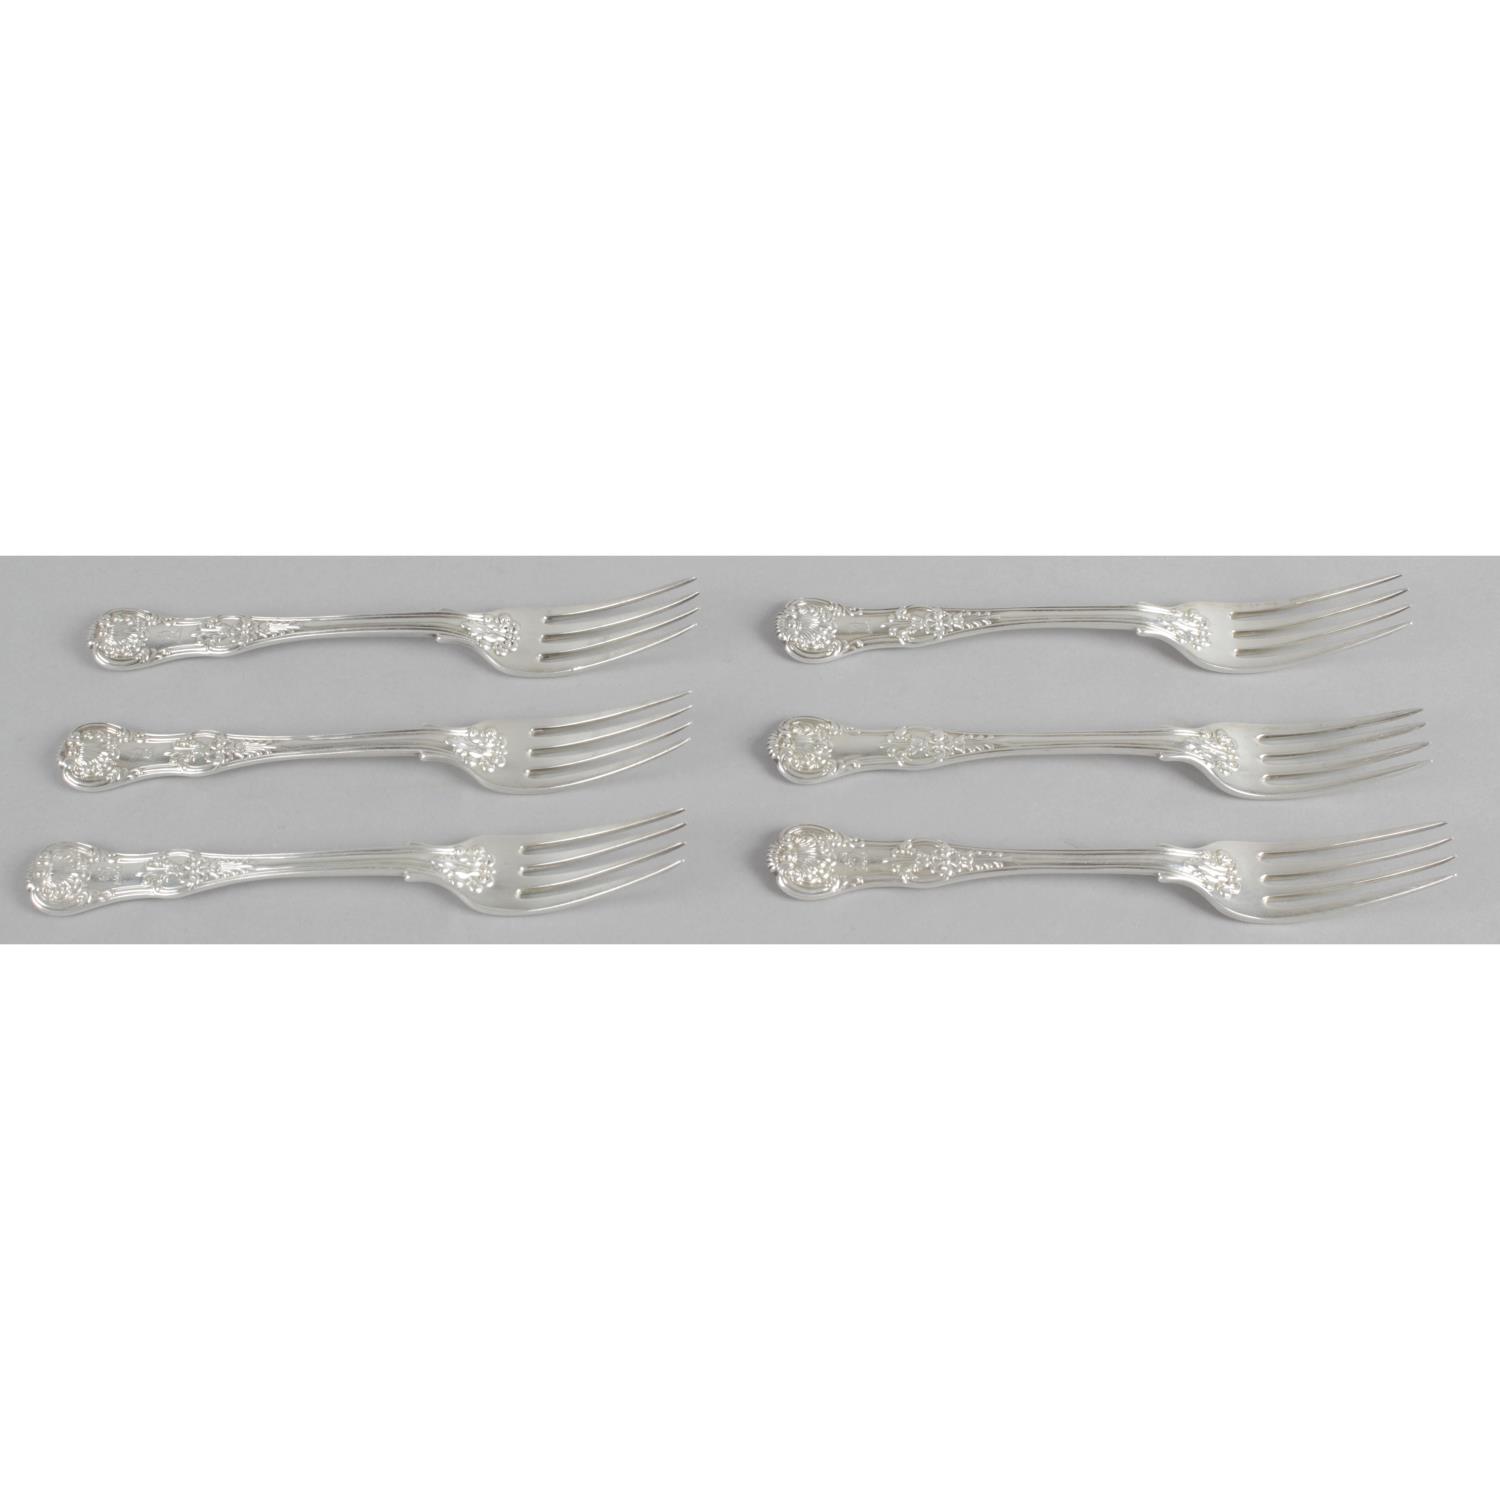 A set of six George IV silver dessert forks,